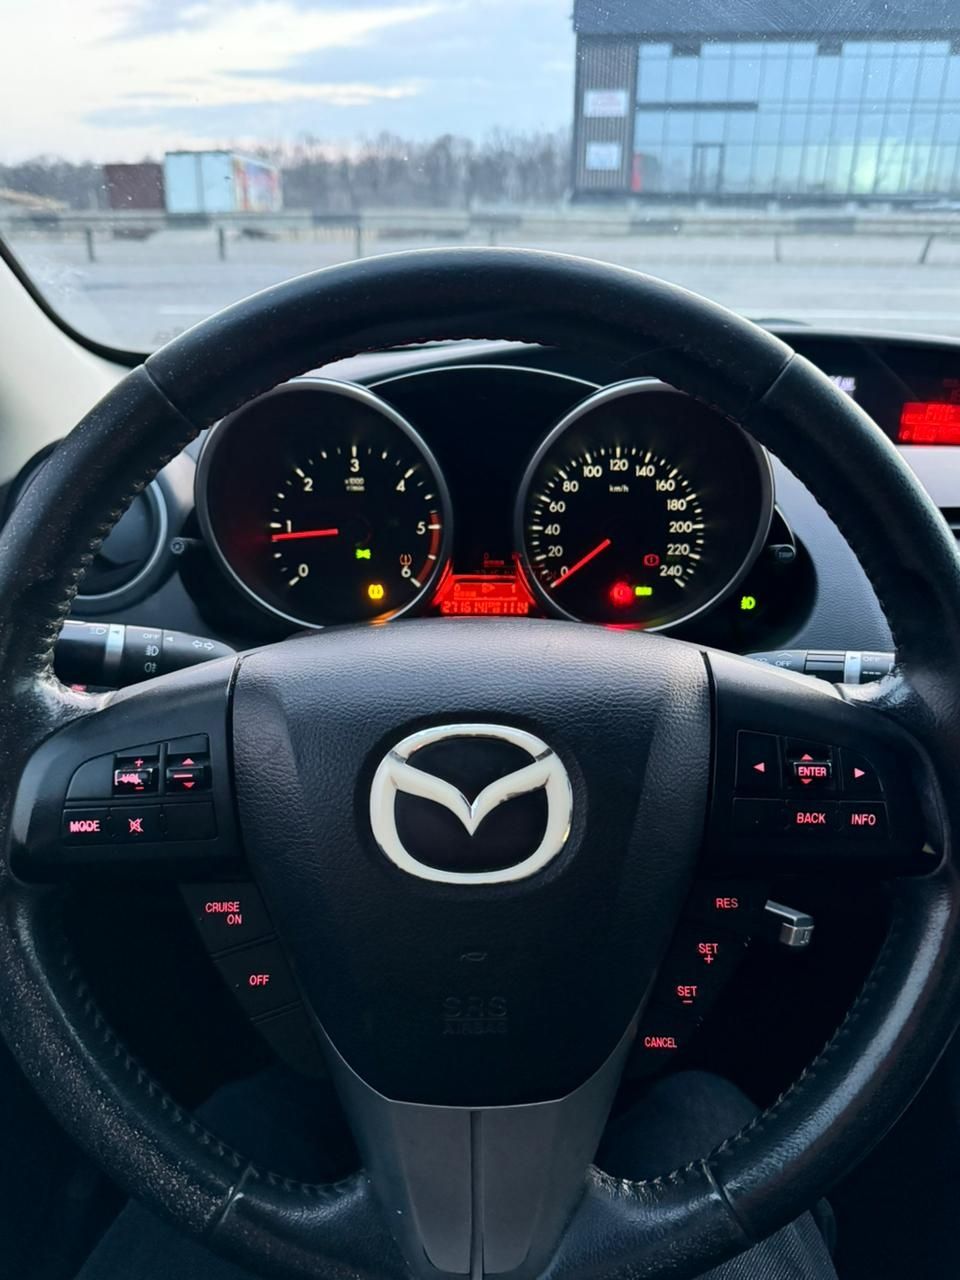 Продам машину Mazda 3, 2009р ,1.6 дизель